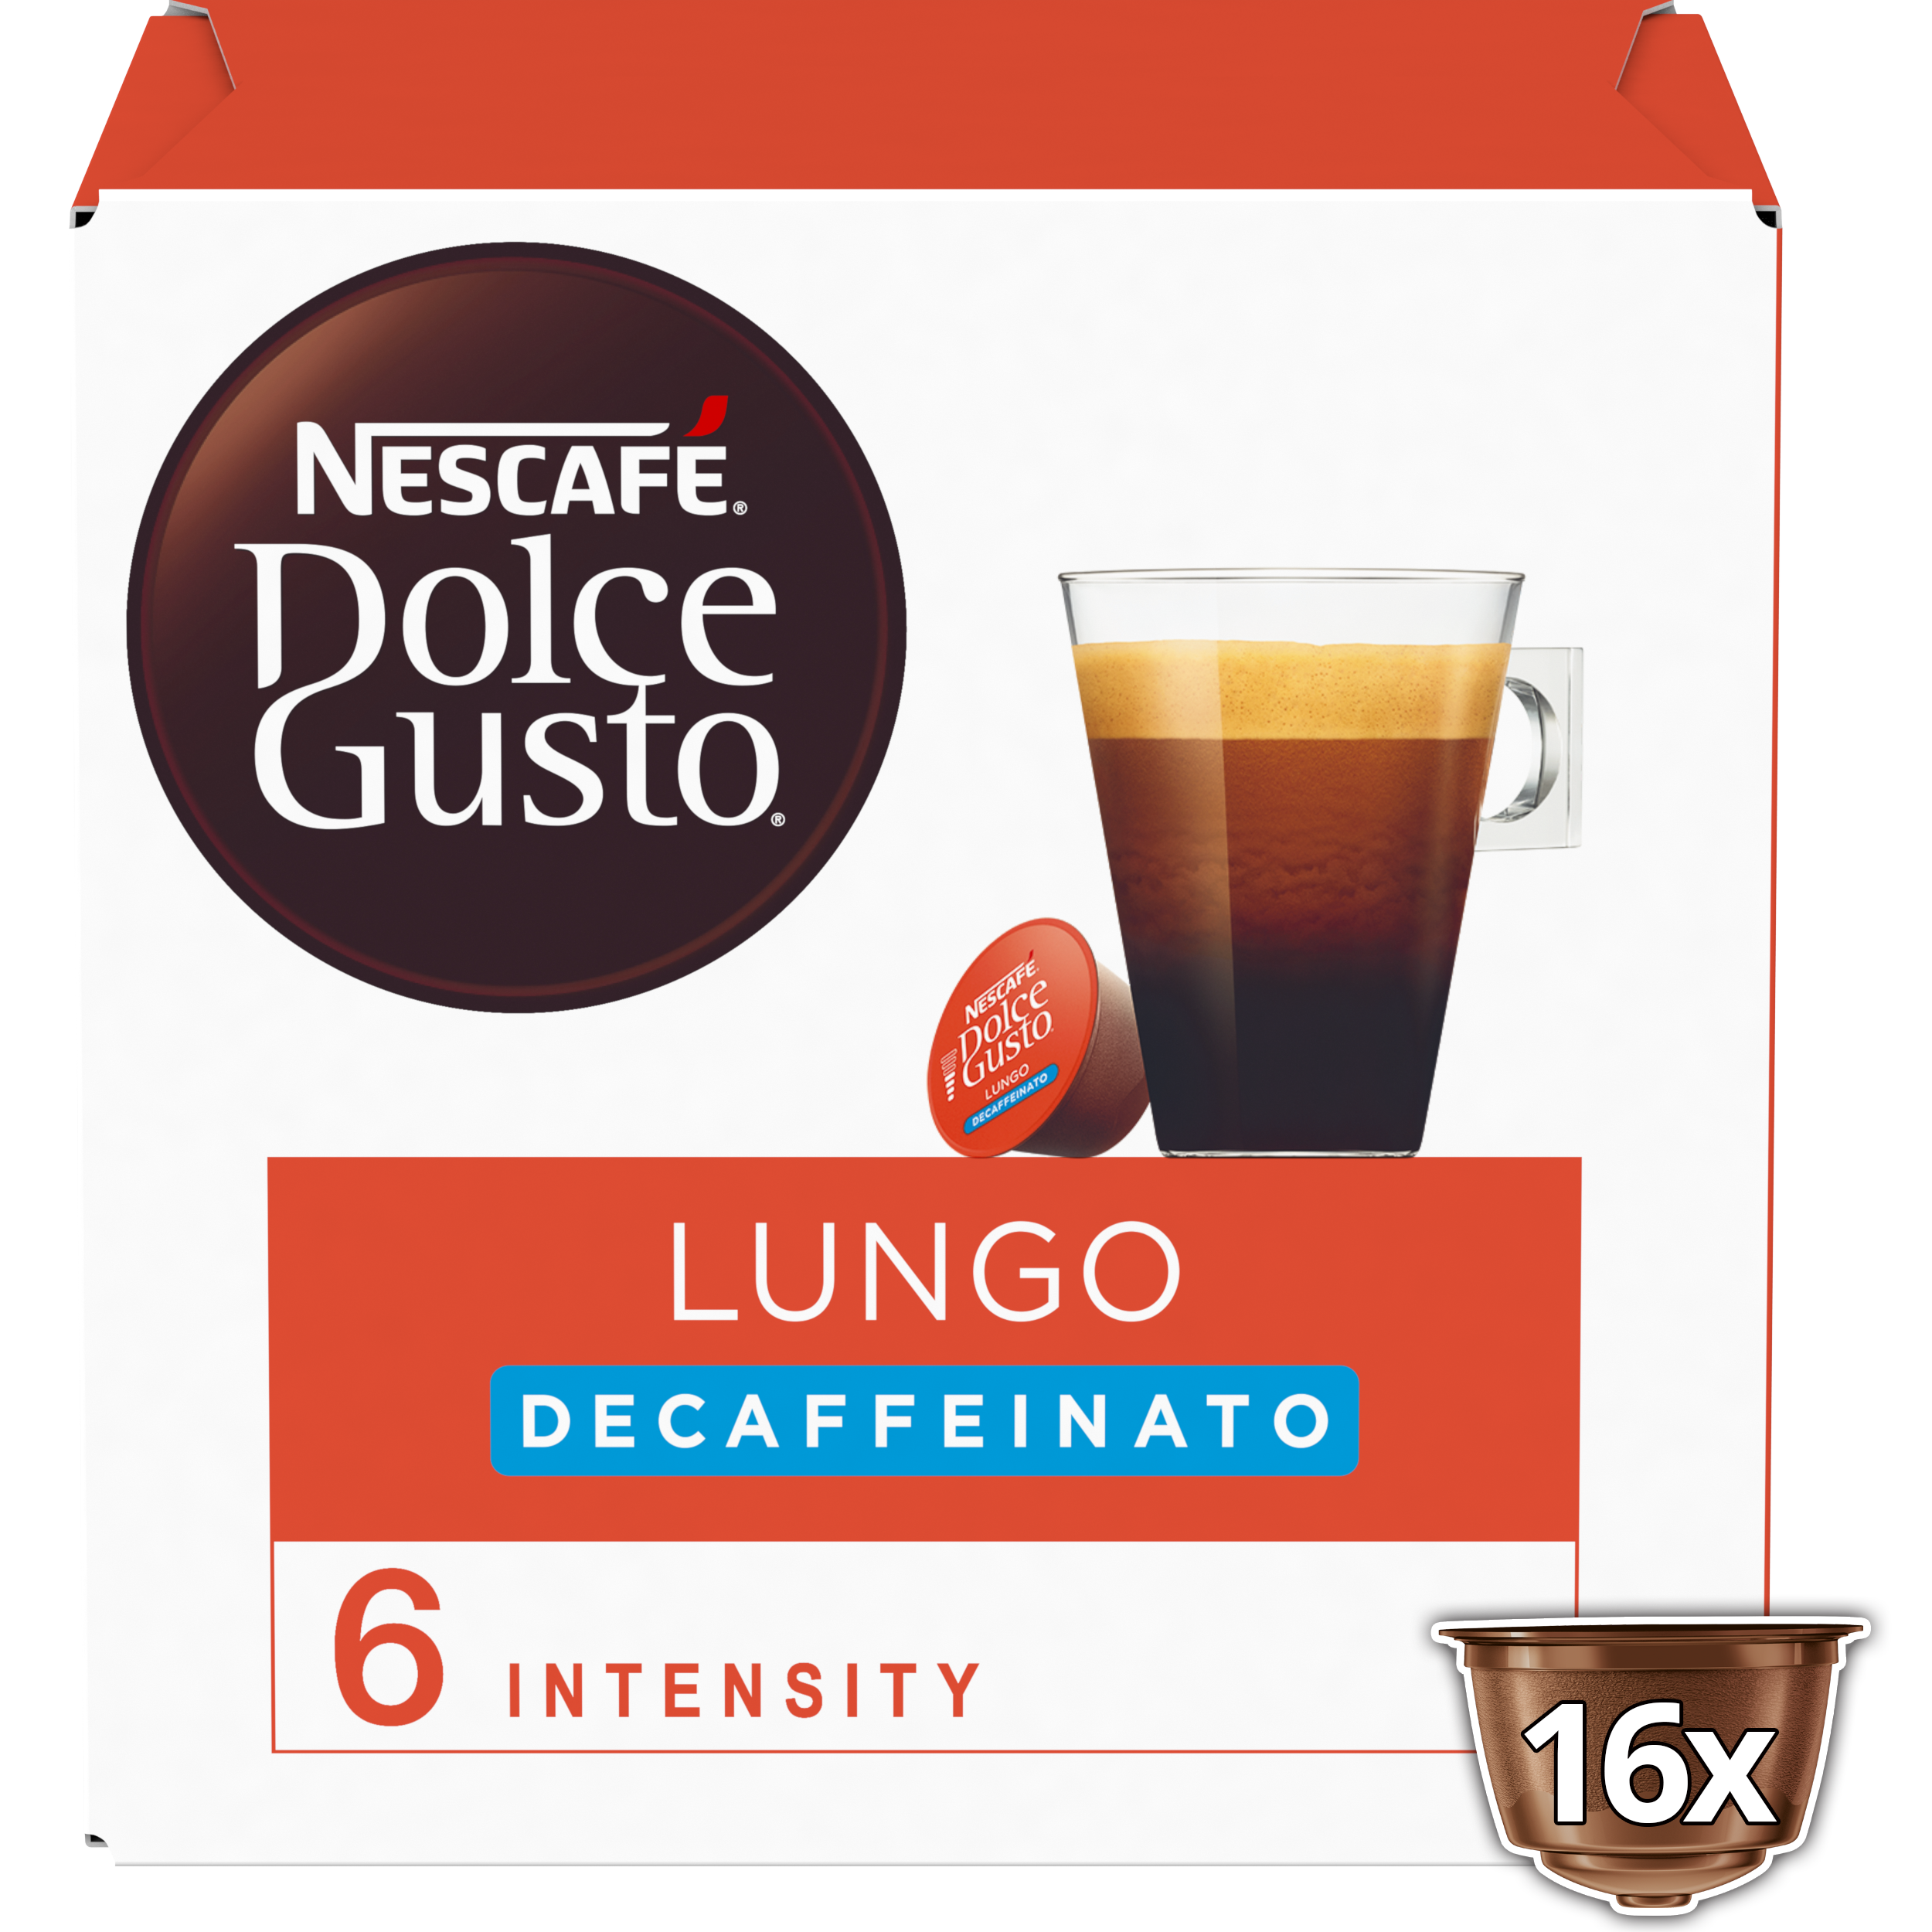 Nescafé Dolce Gusto Lungo decaffeinato: Decaf